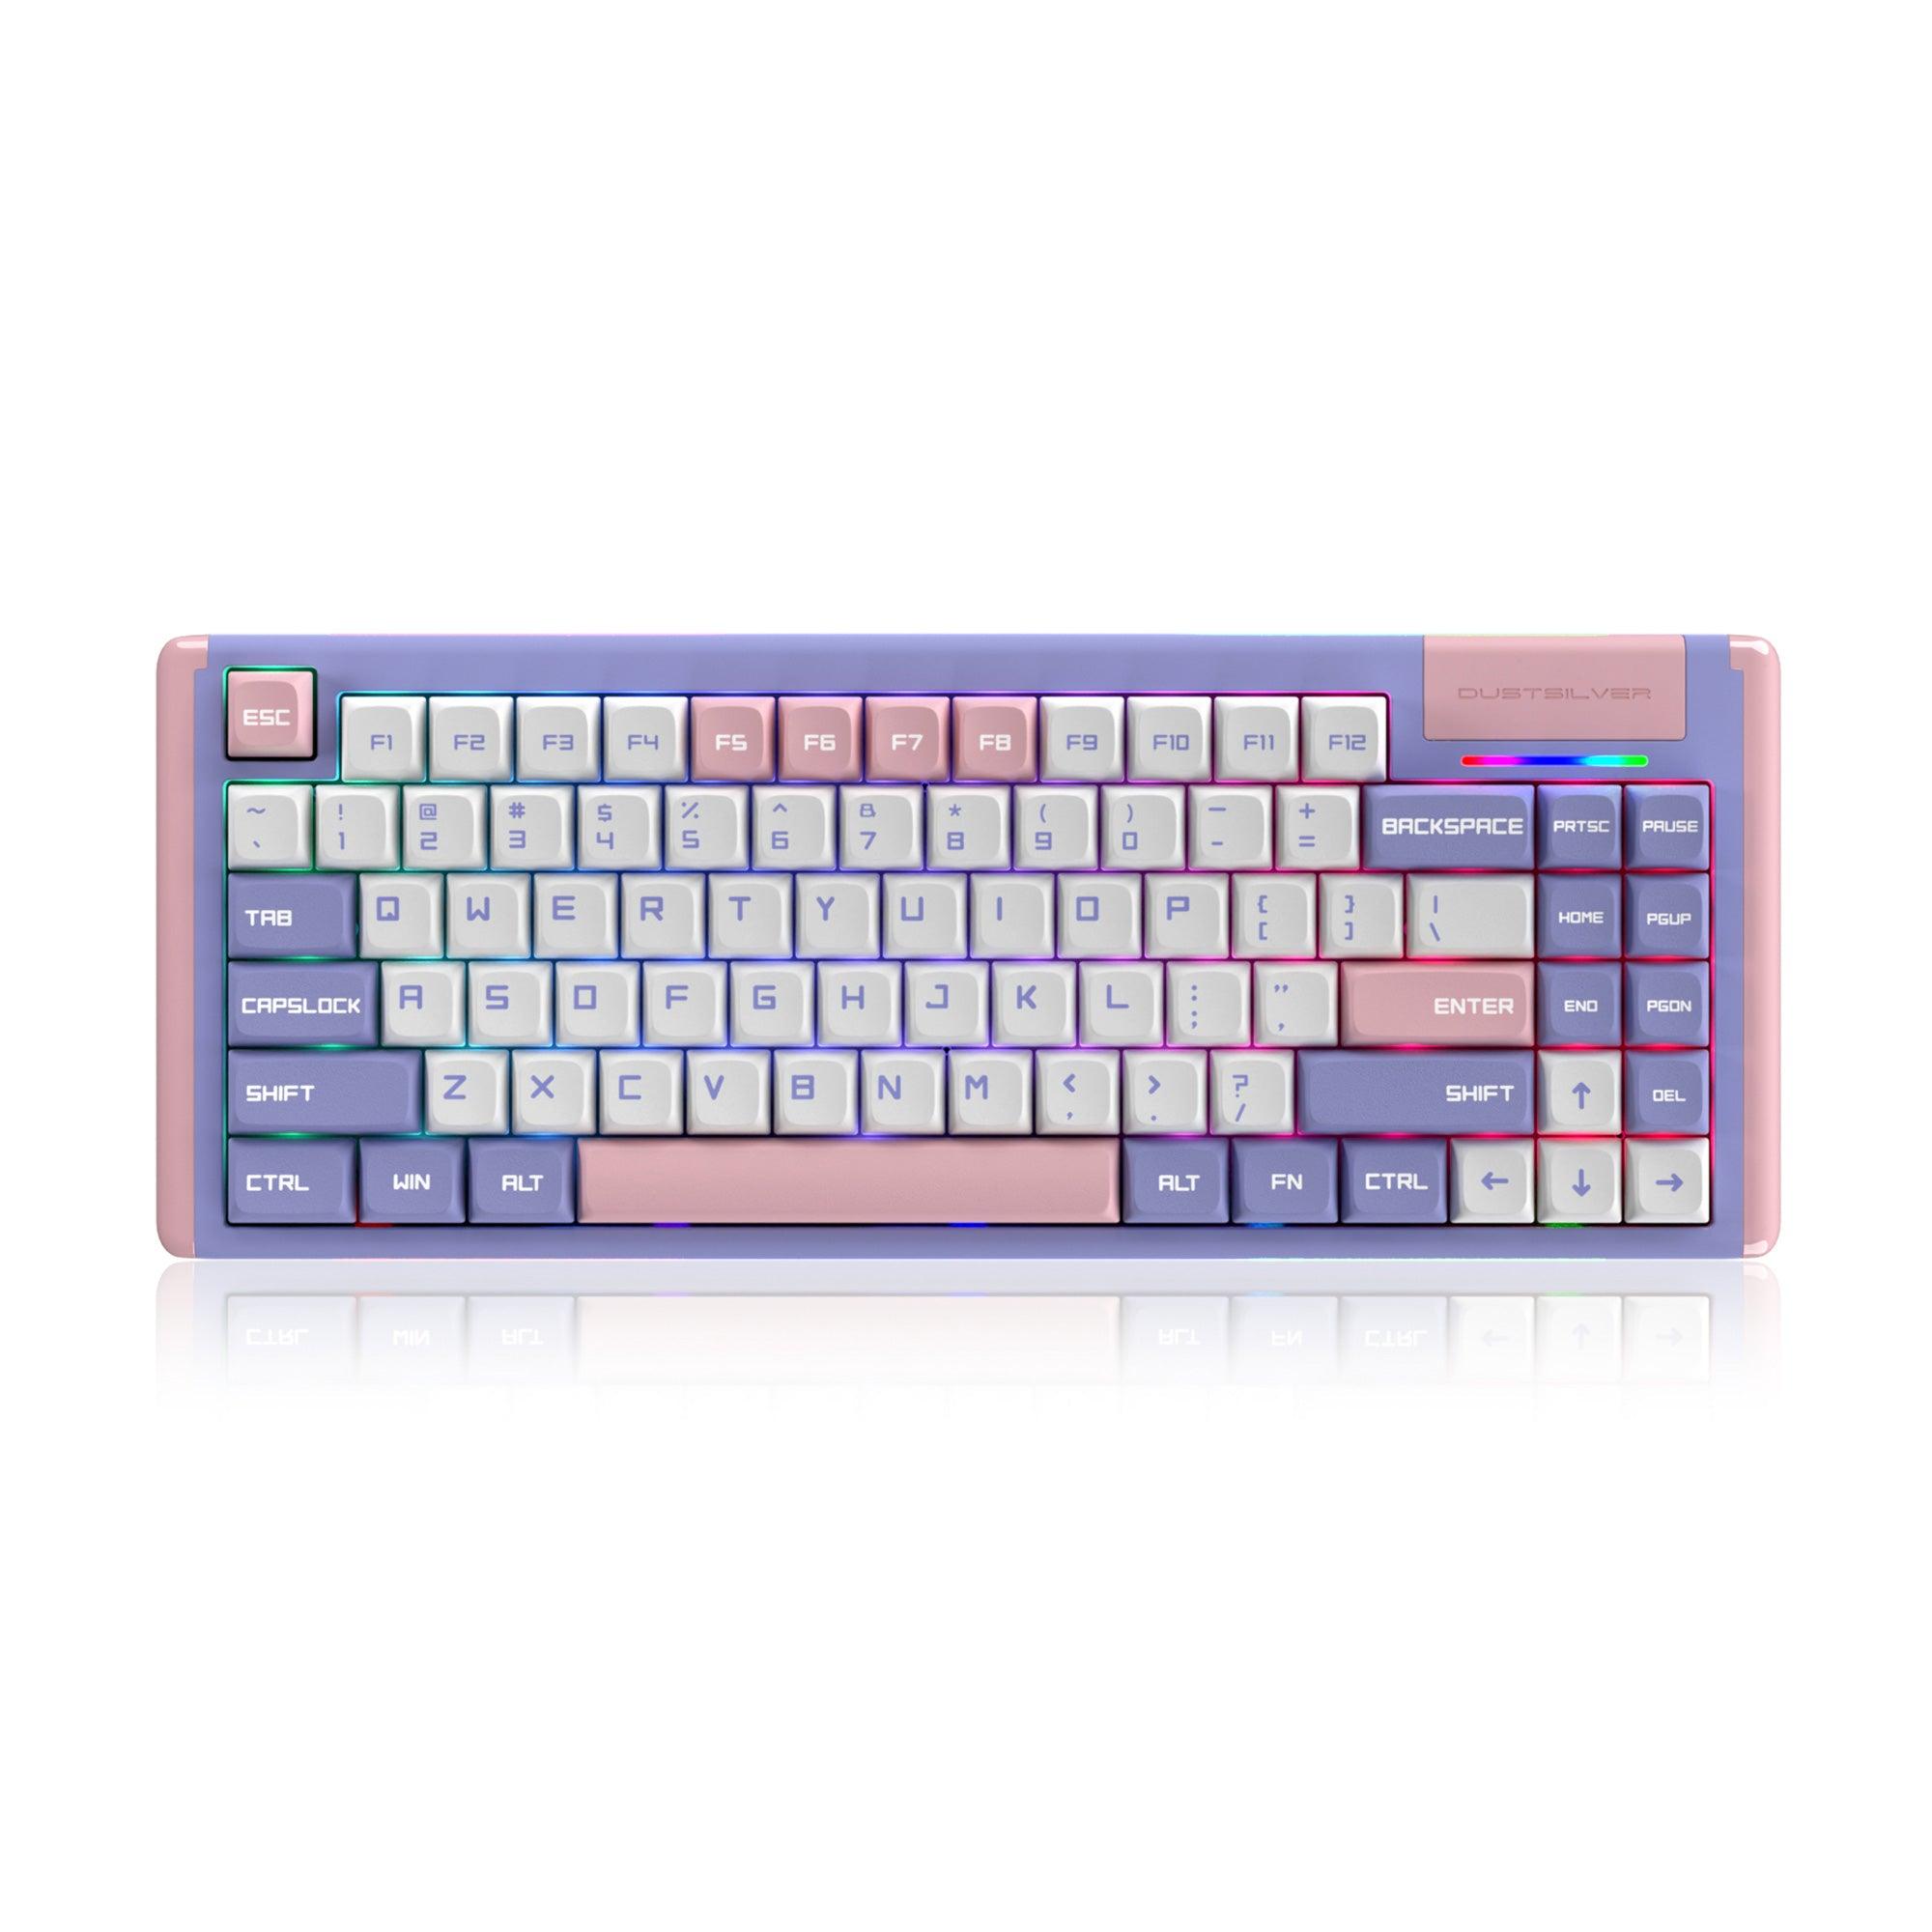 Purple Pink Lilac 75 Percent Cute Kawaii Mechanical Keyboard - dustsilver